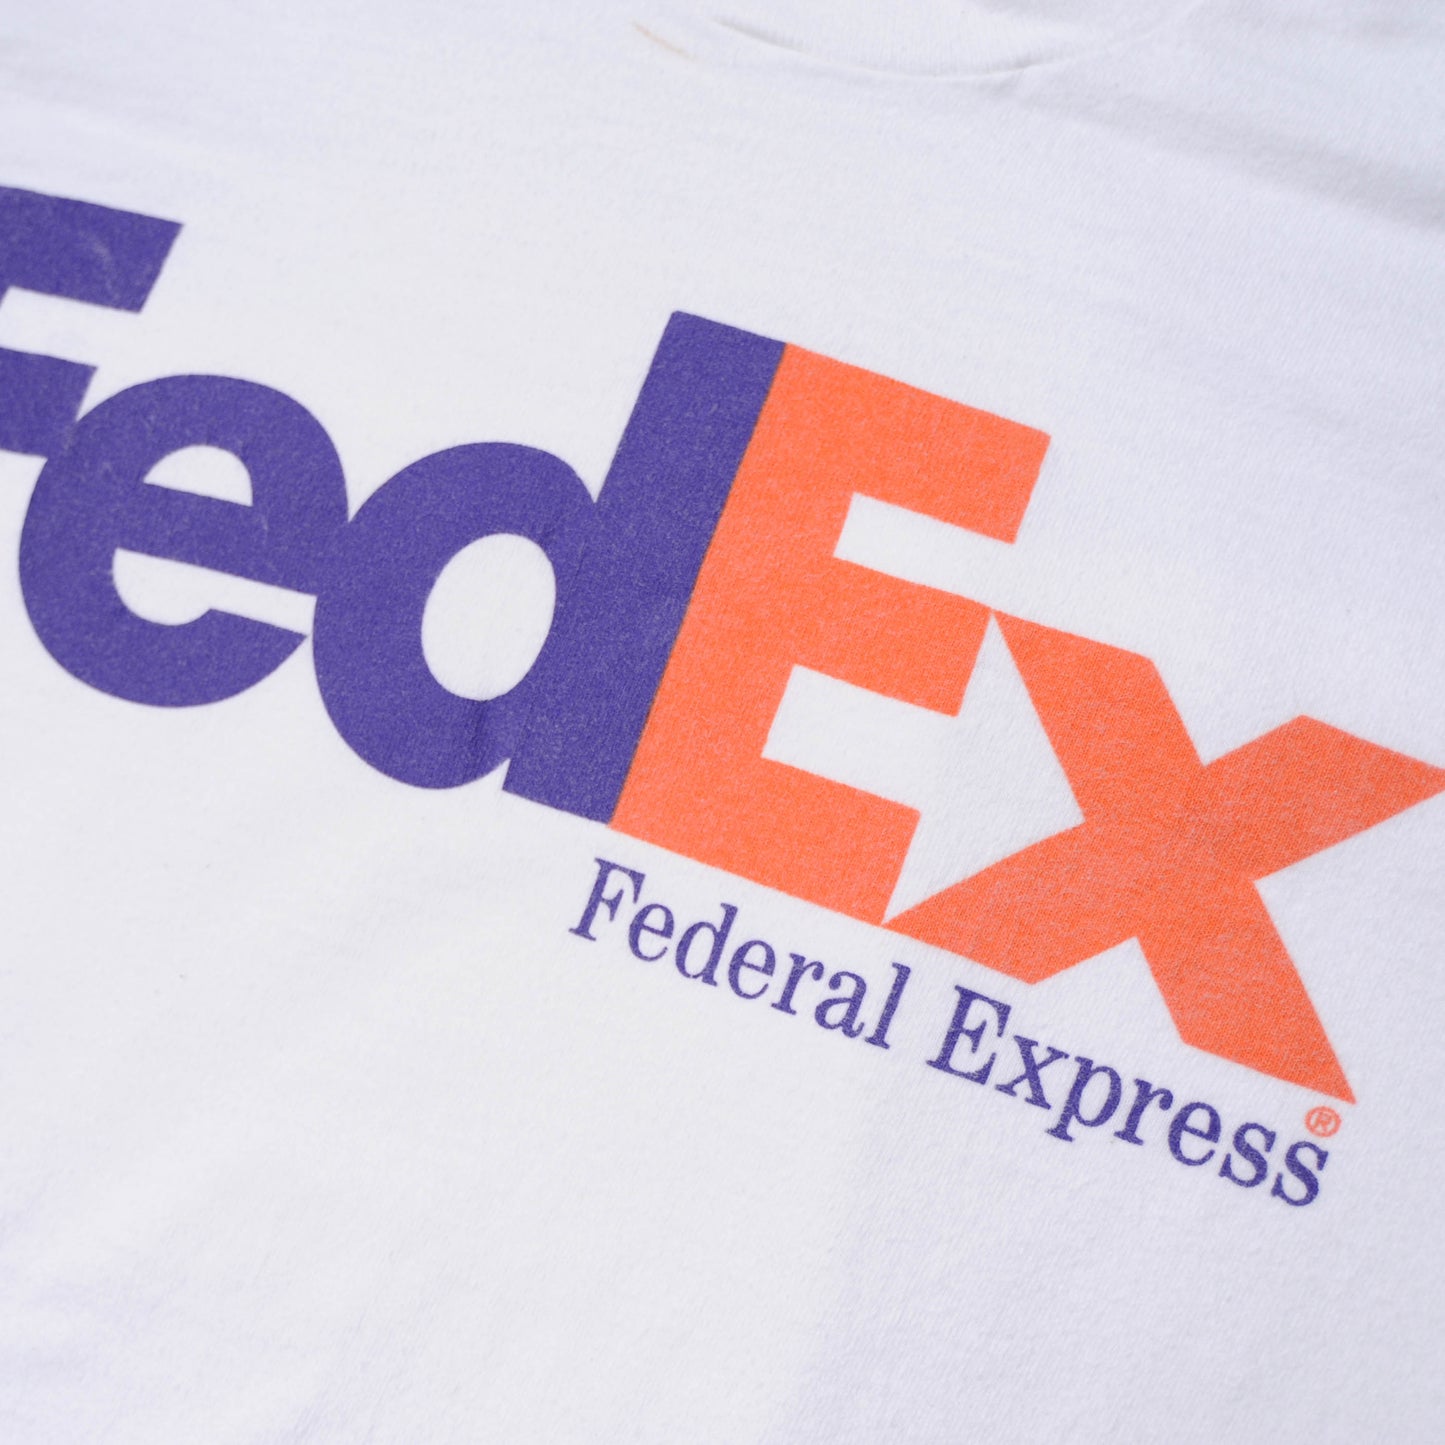 90's FedEx 企業Tシャツ(M)/A3423T-S